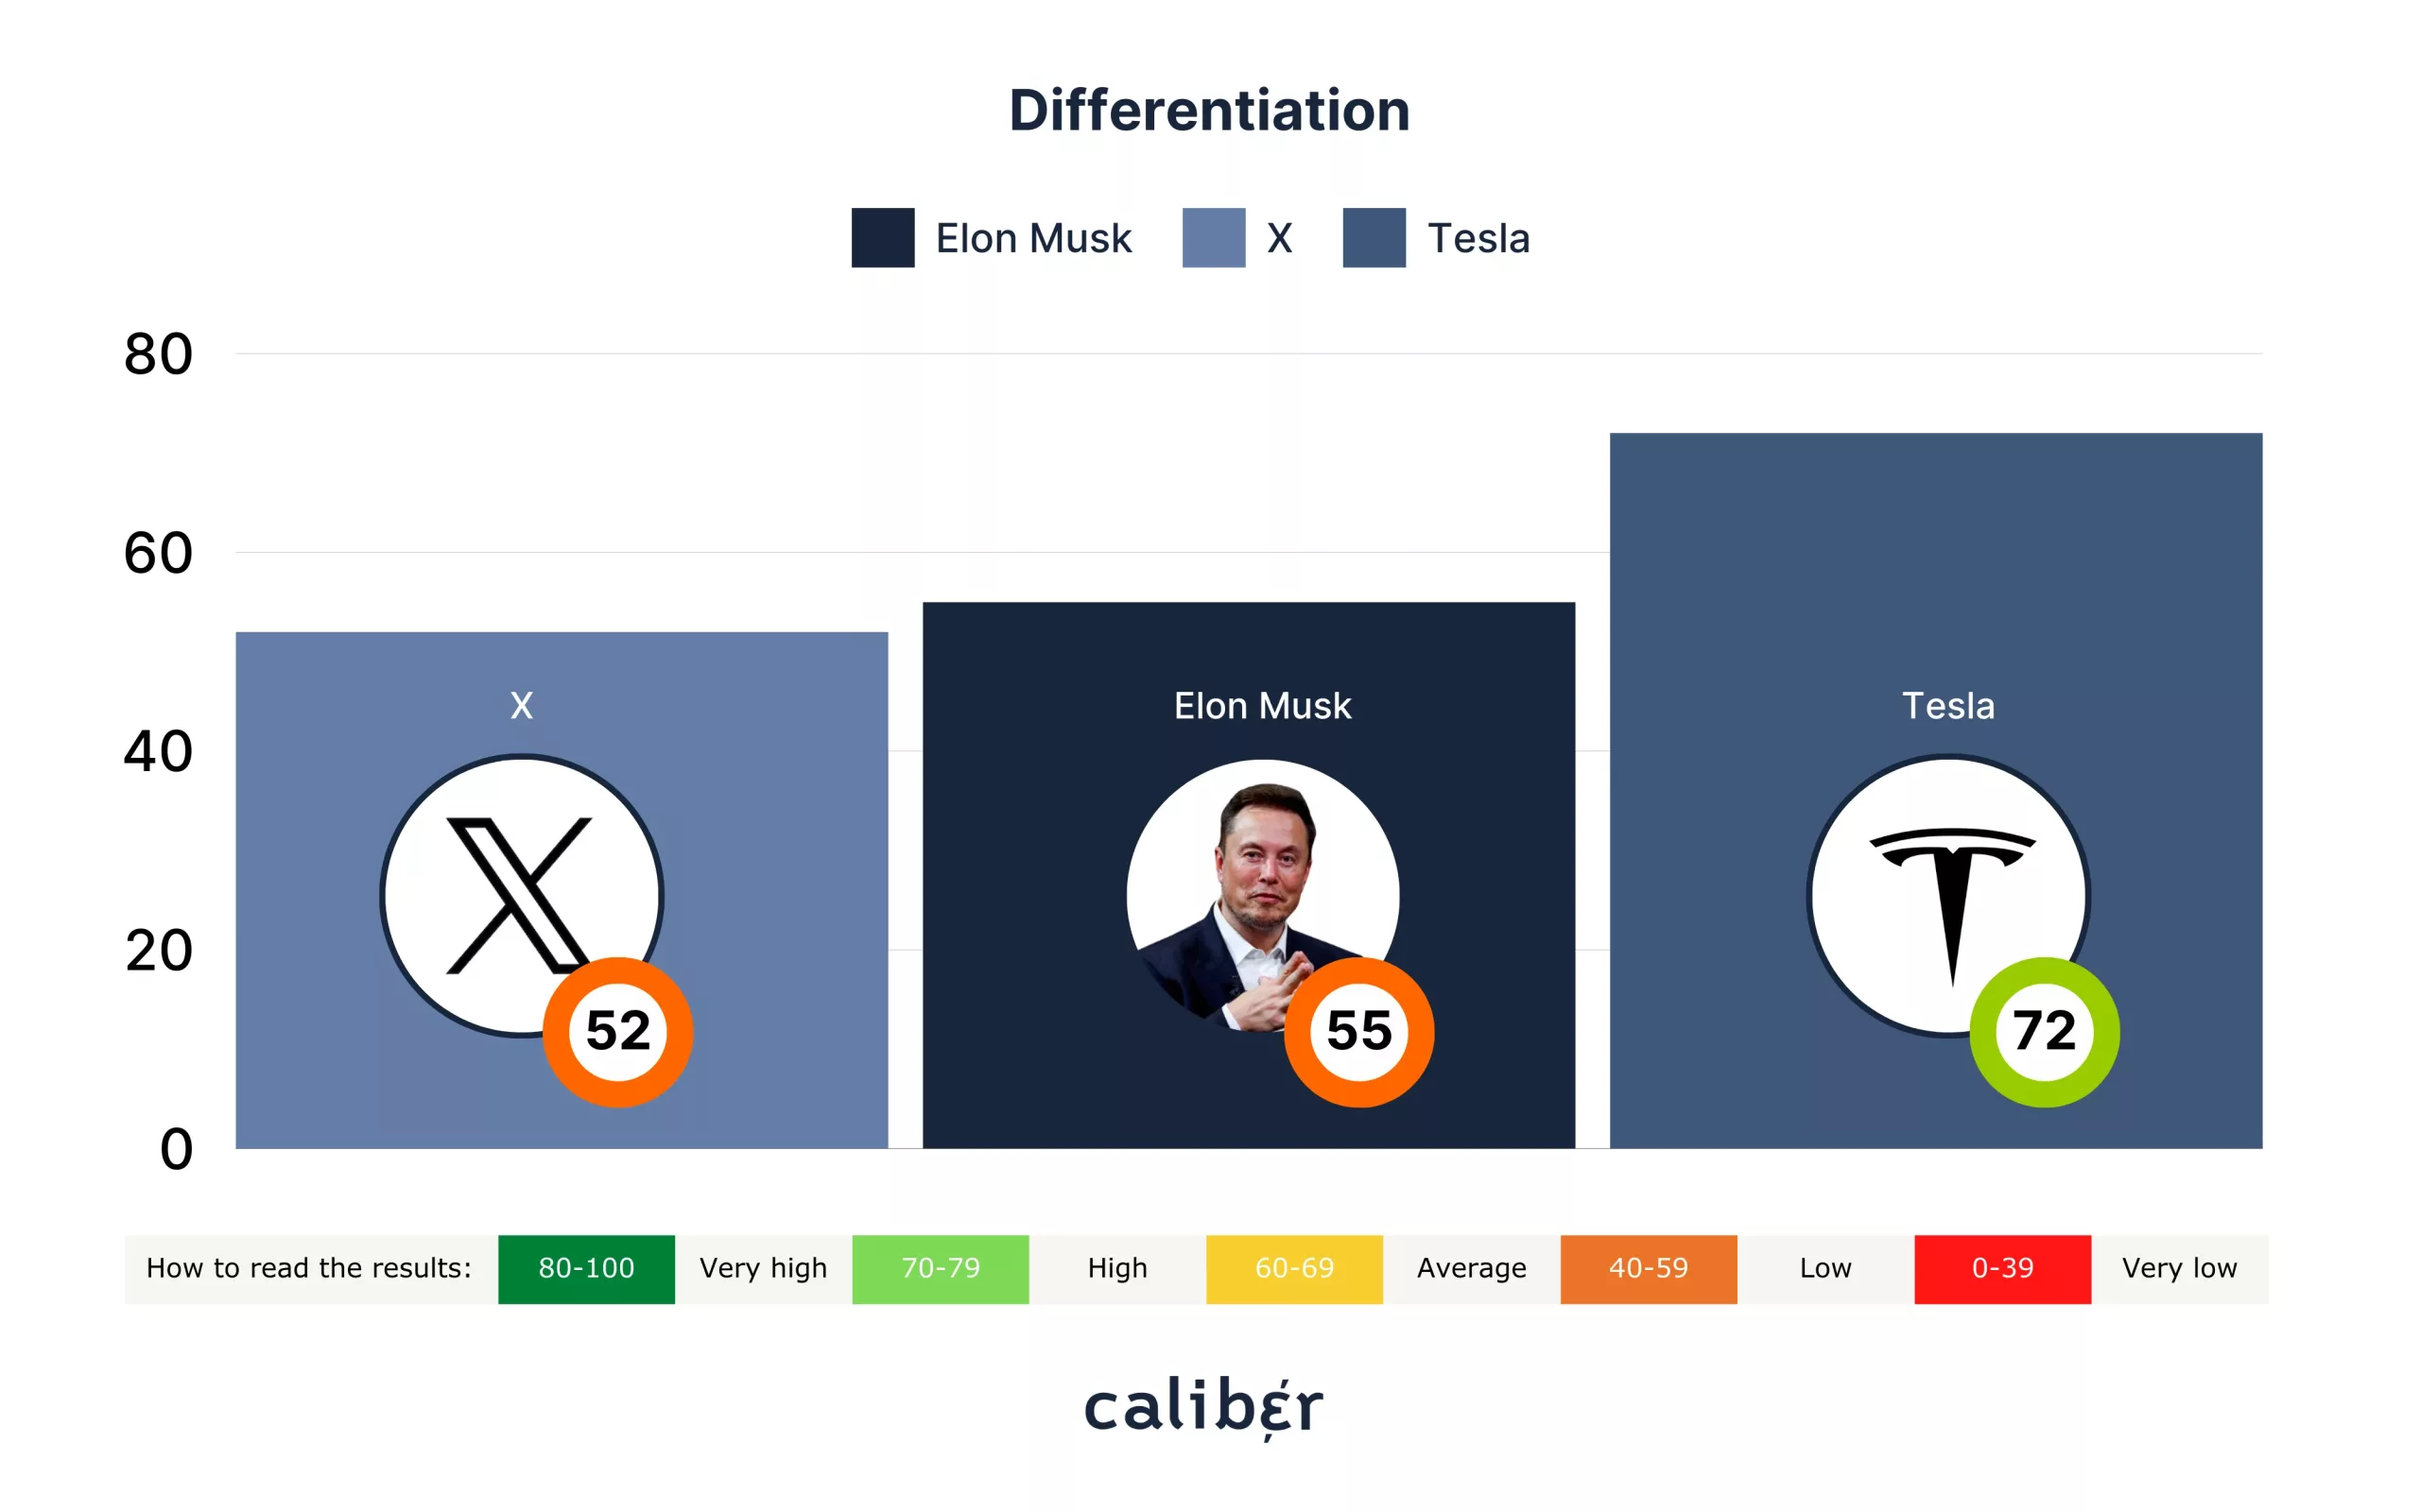 Elon Musk Differentiation Score